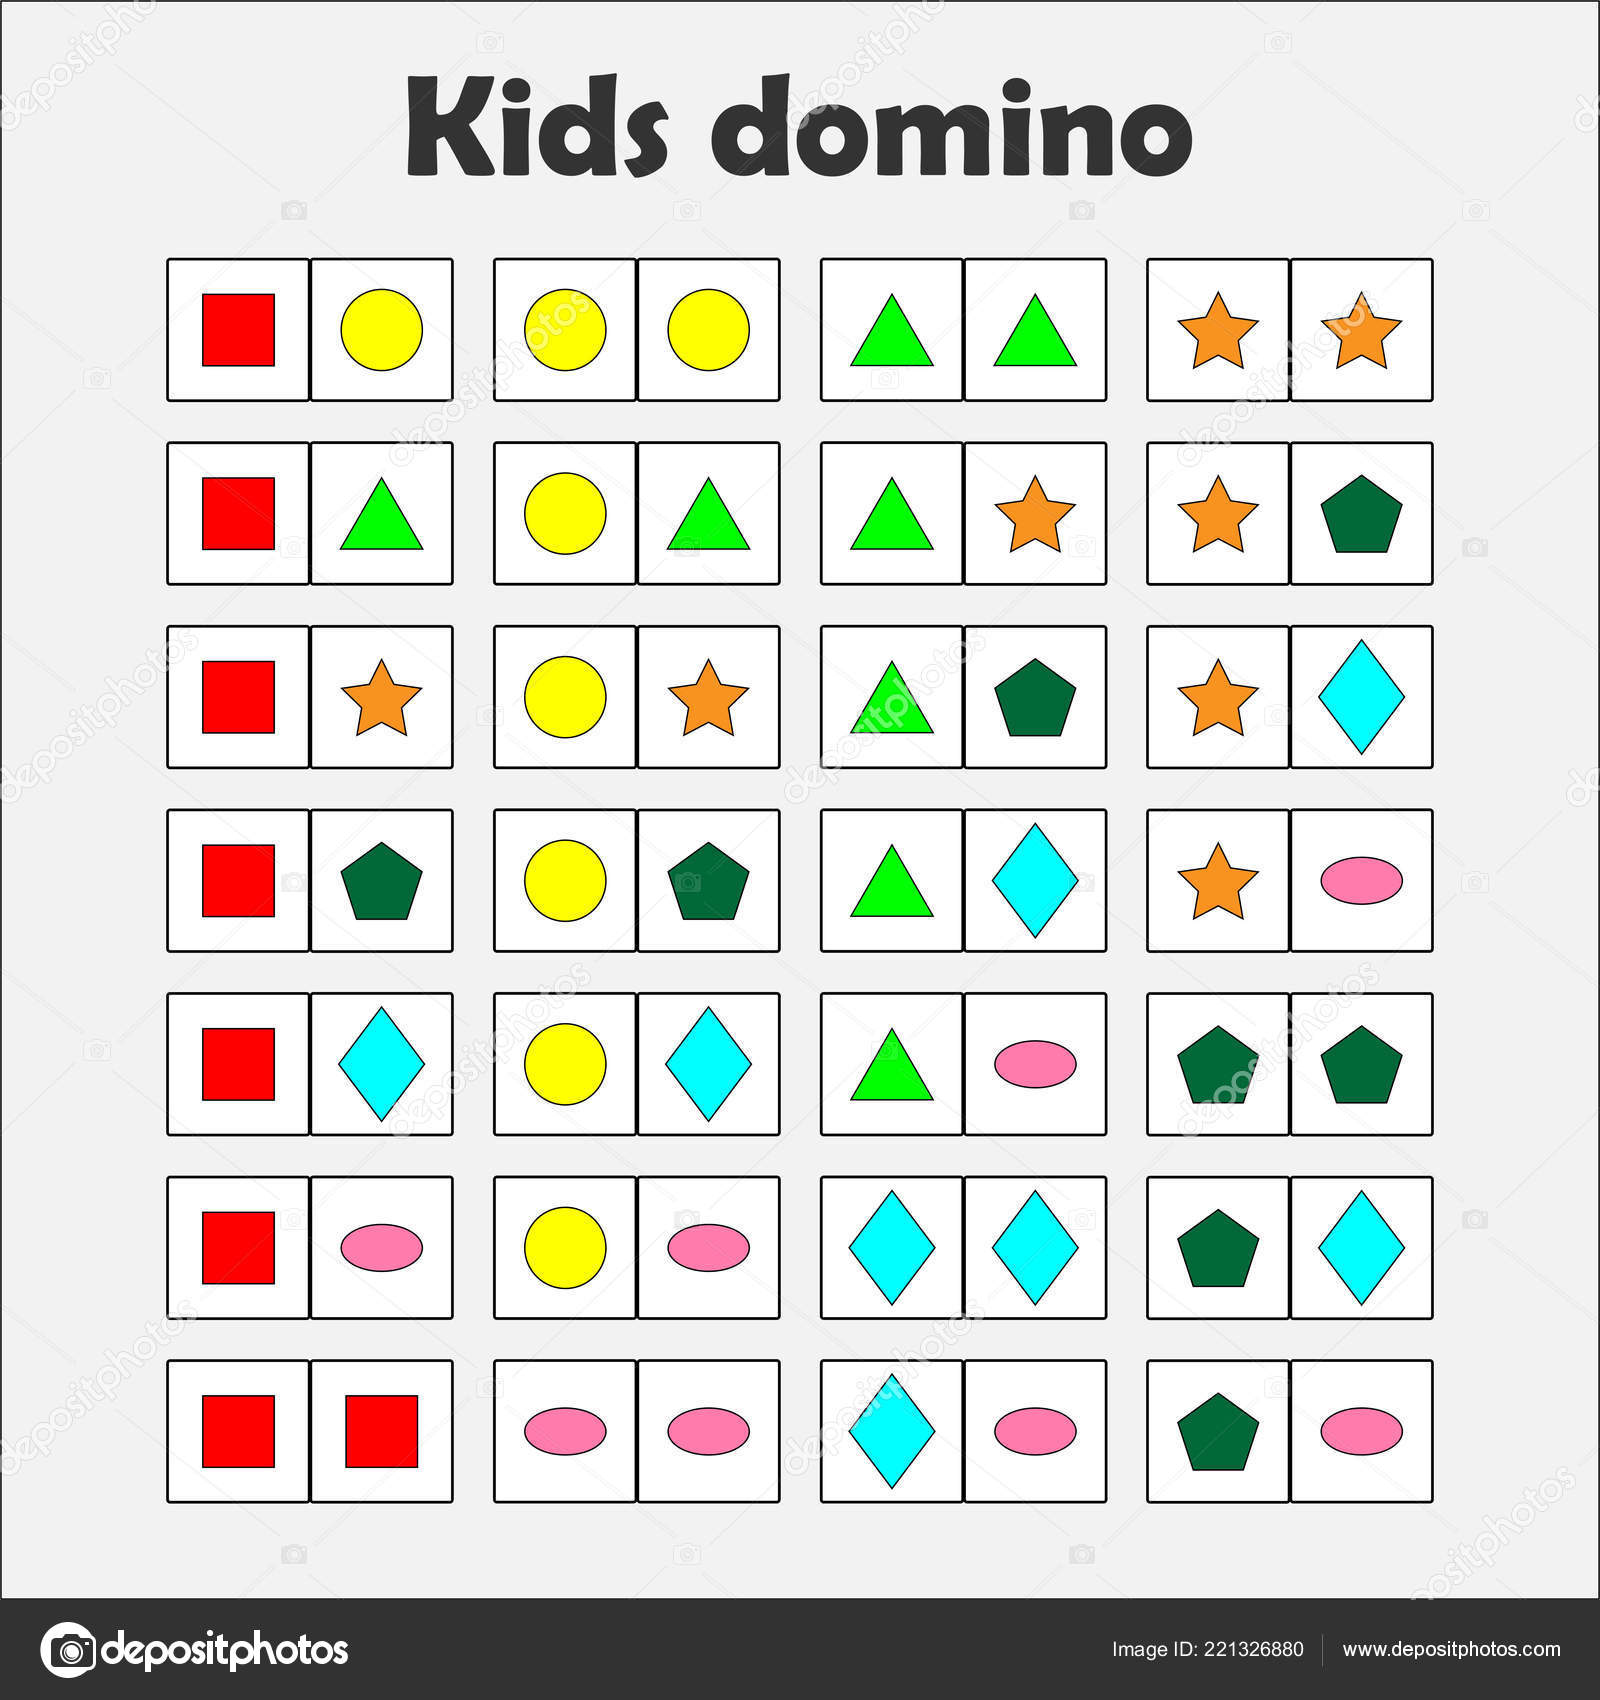 Animais - Jogo de Dominó em Português  Domino games, English activities  for kids, English worksheets for kids